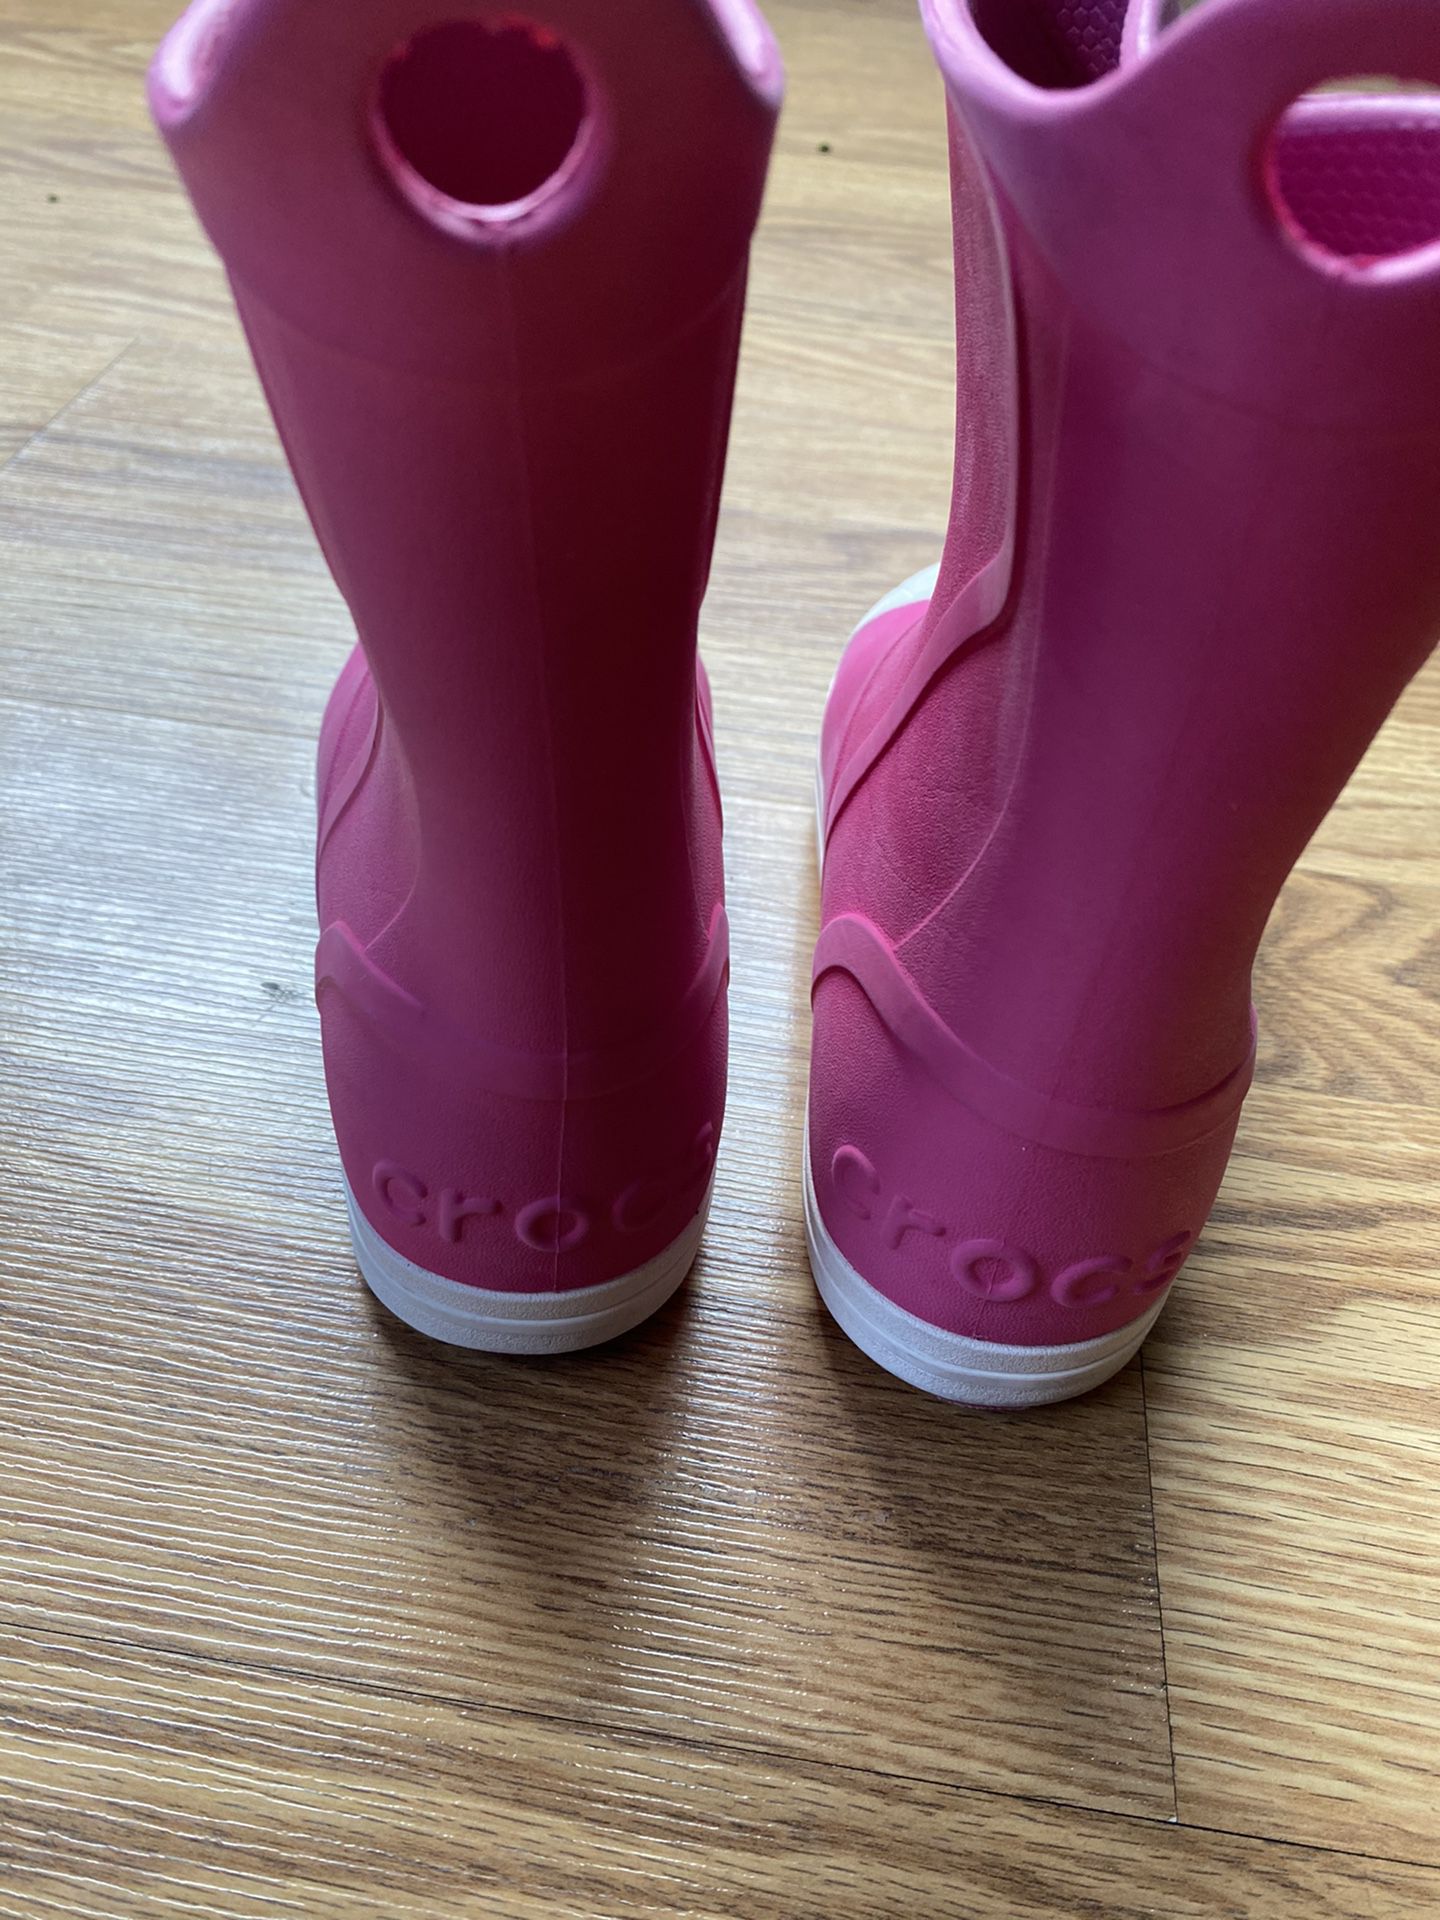 Girl’s Hot Pink Rain Boots Crocs-Size 11